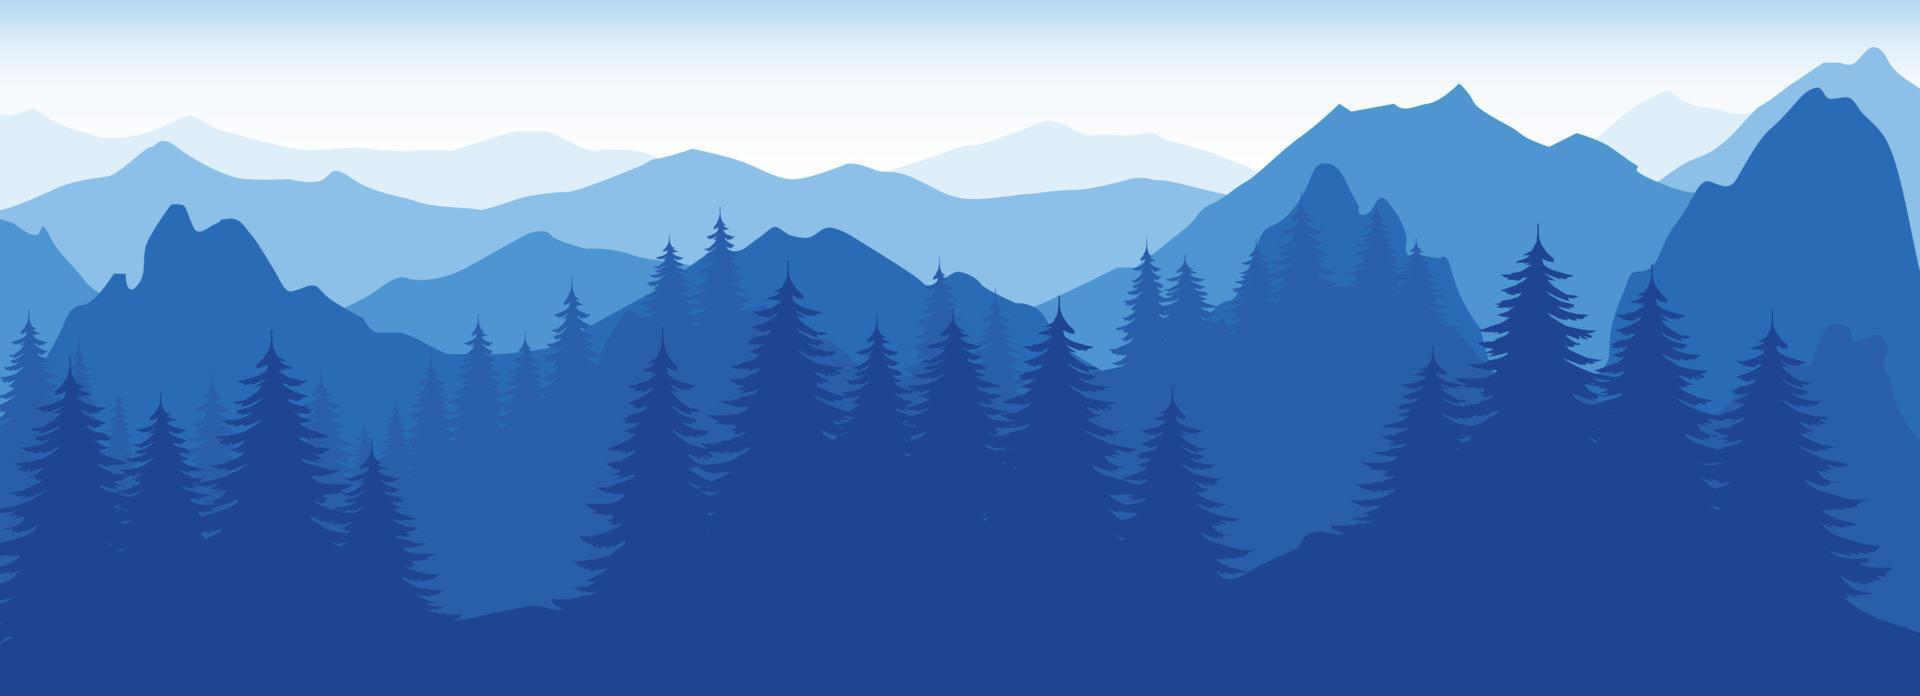 vektor bakgrund med blå berg, vintergrön skog